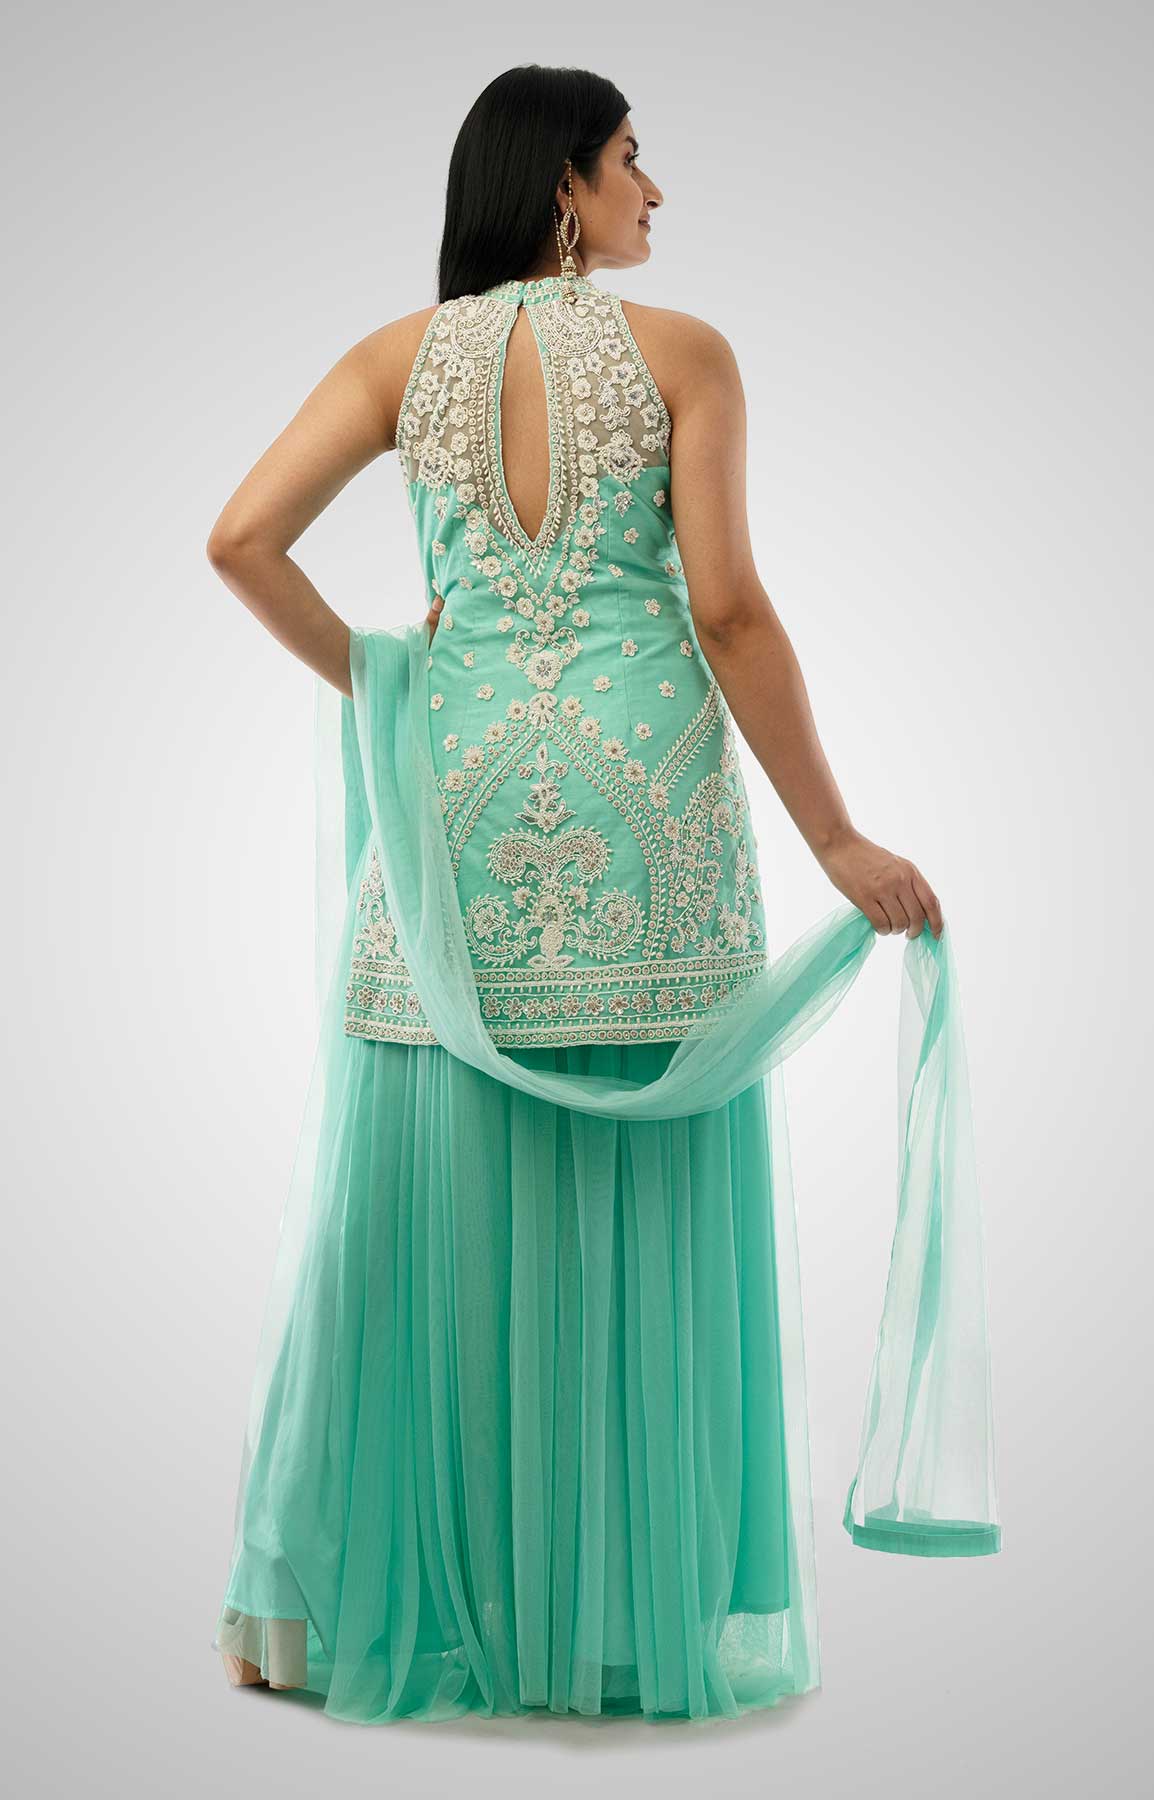 Ferozi Net Suit With Sharara Embellished With Pearls And Stone Work – Viraaya By Ushnakmals